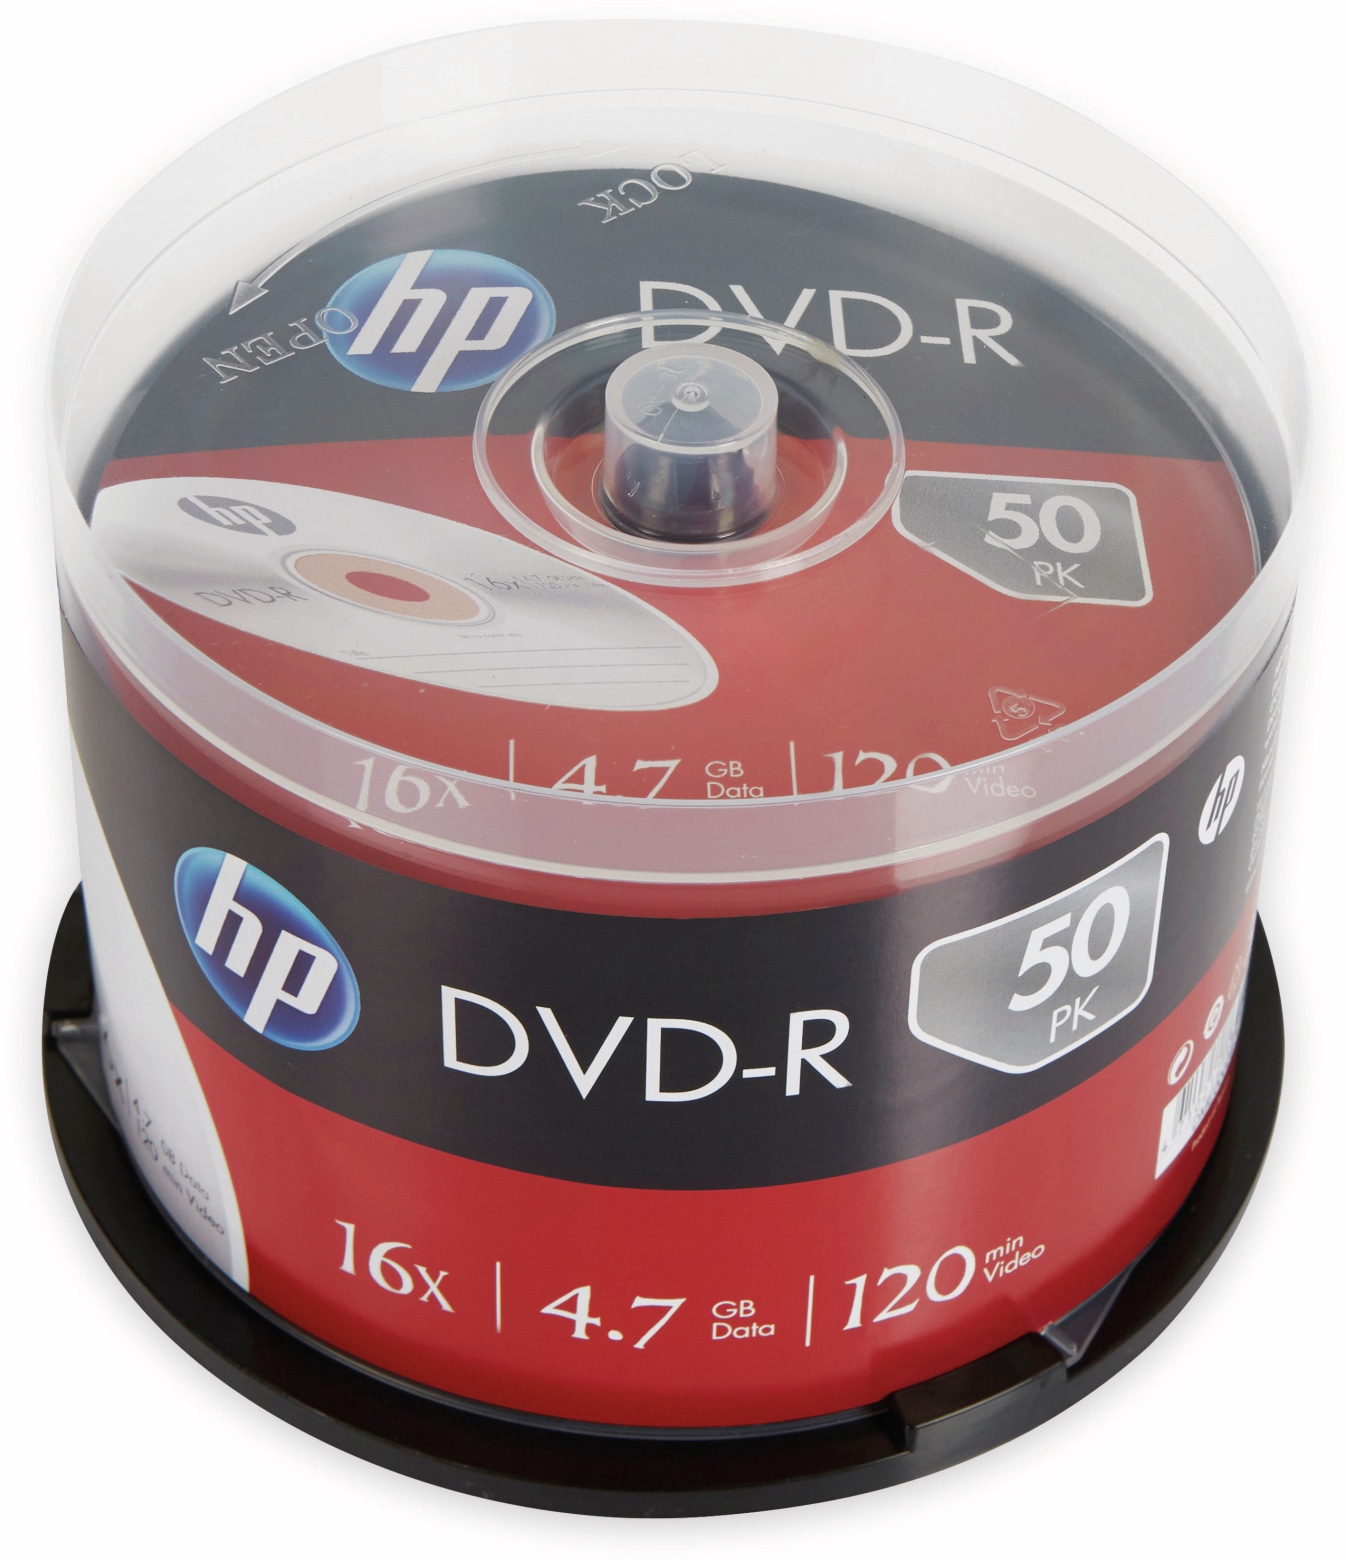 HP DVD-R 4.7GB, 120Min, 16x, Cakebox, 50 CDs